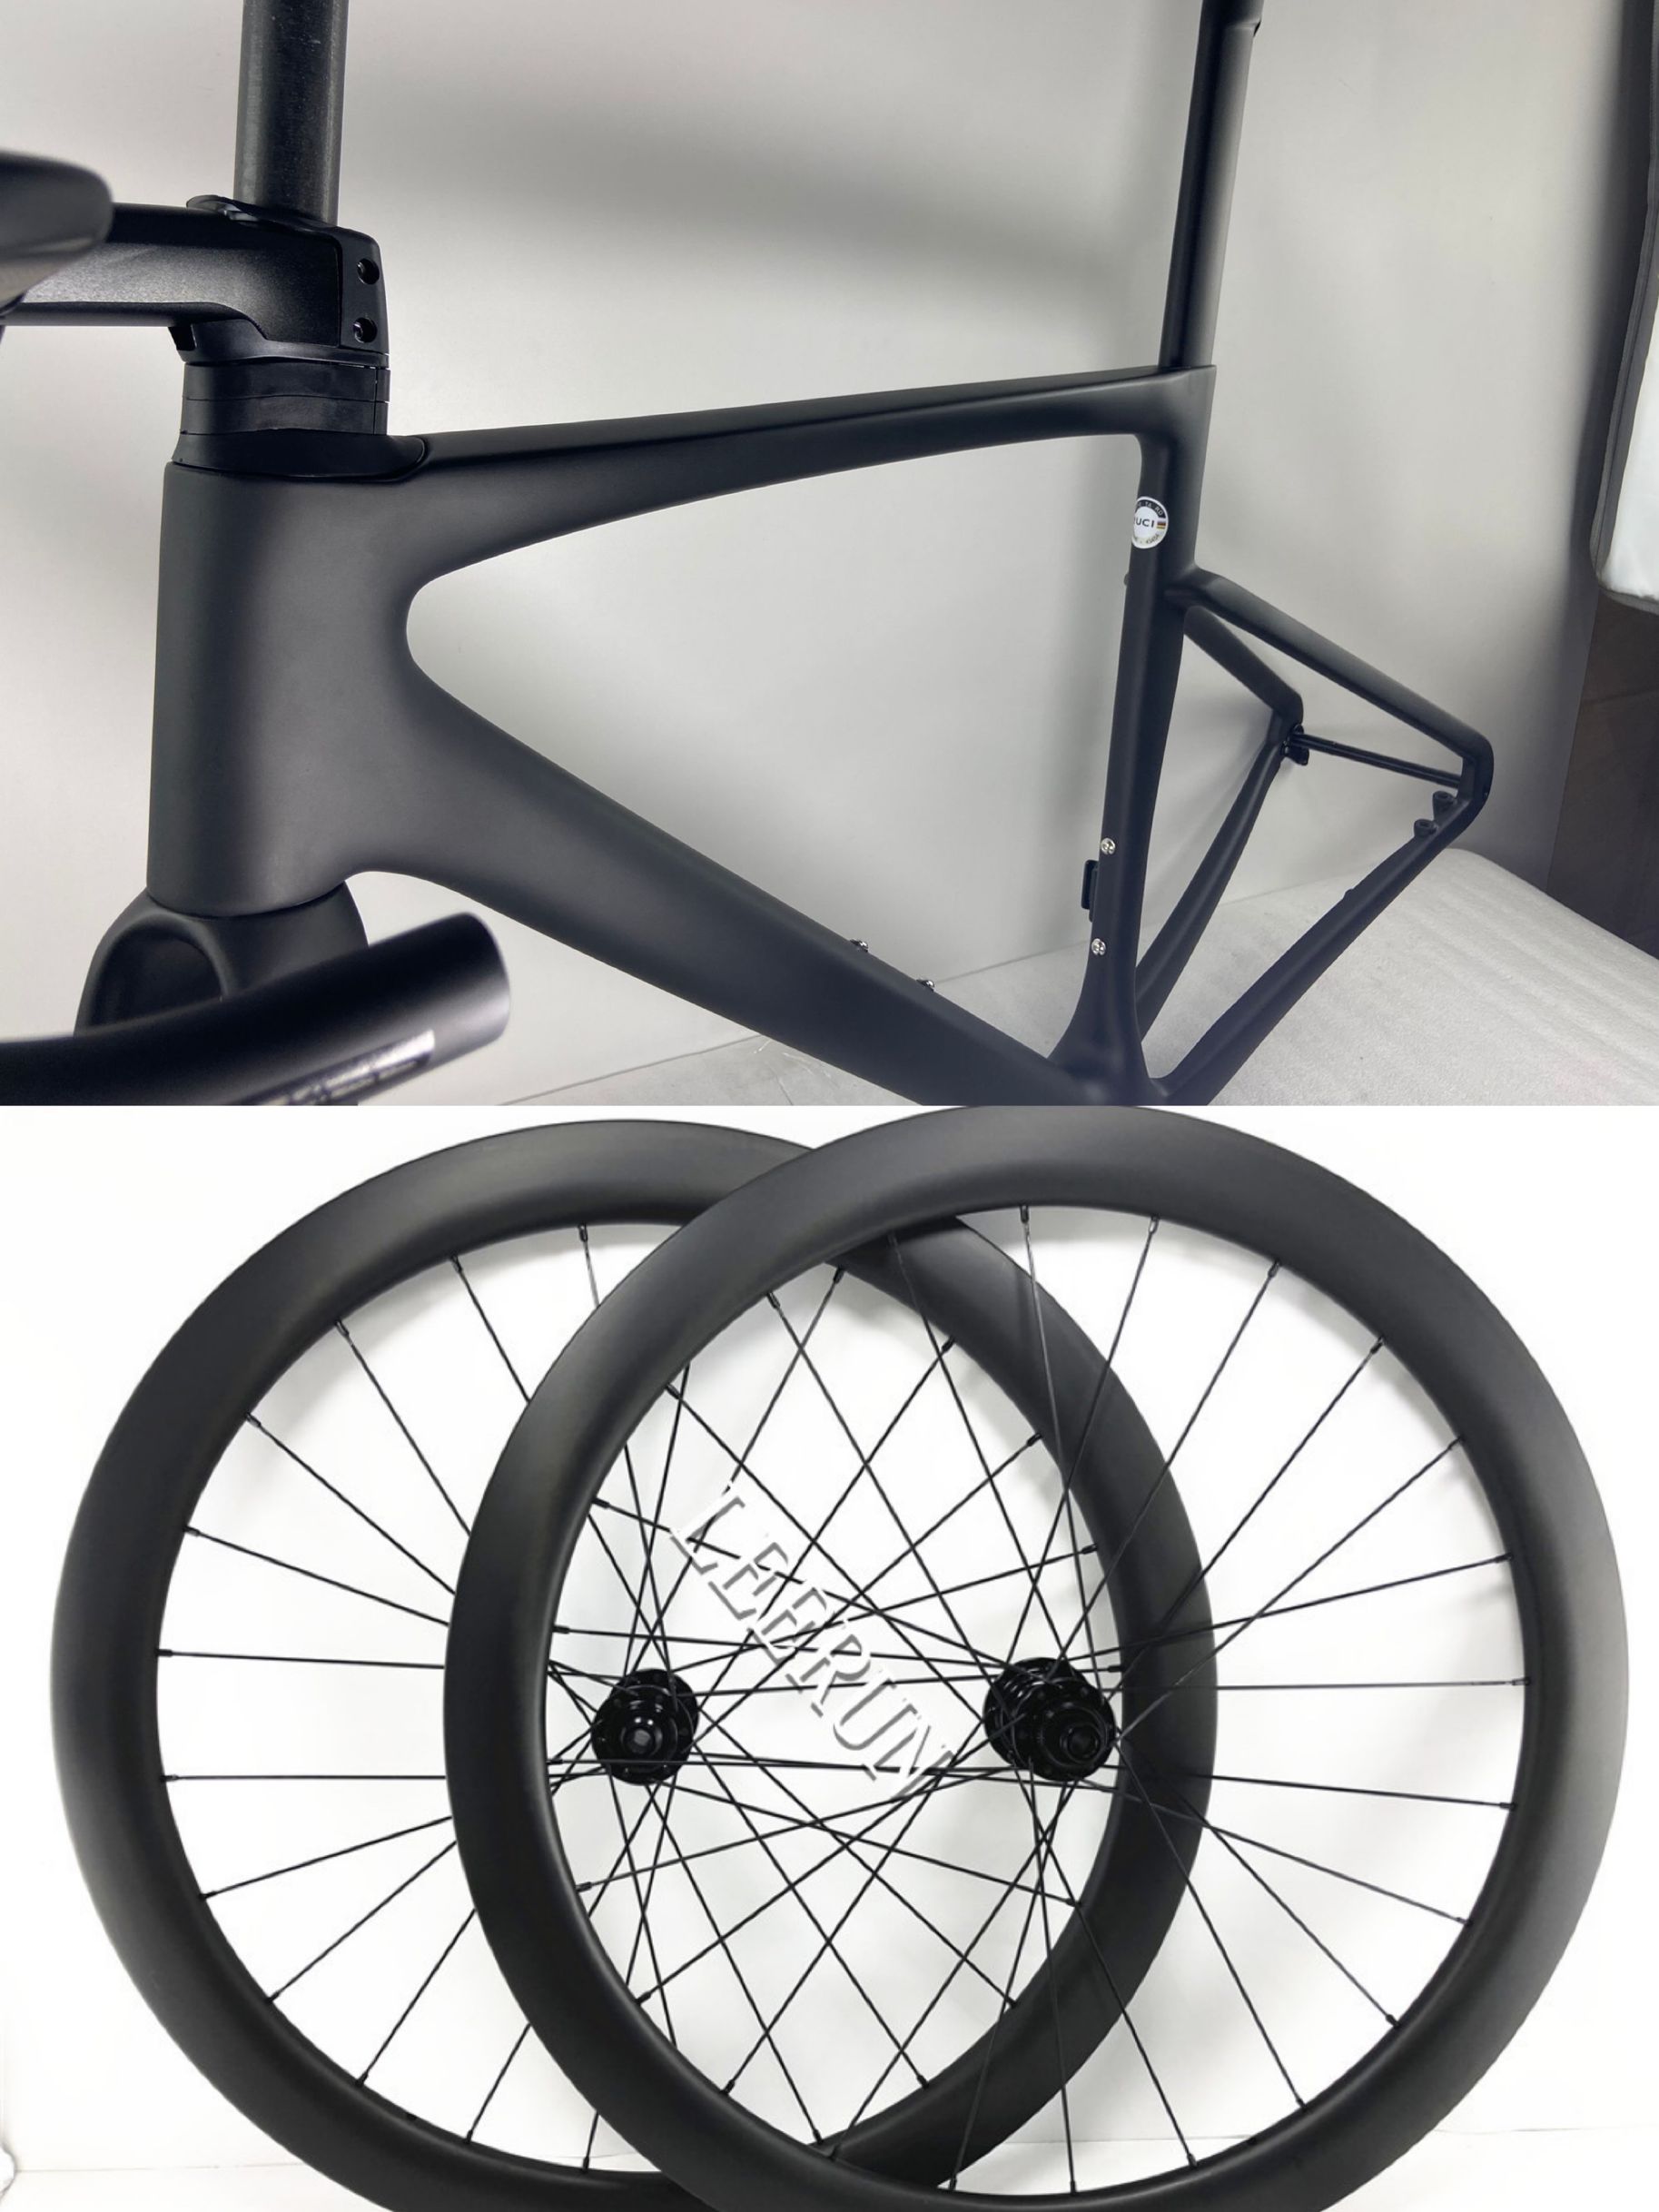 

2022 Newest design carbon frameset Bicycle aerodynamics frames ultra light full road bike frame with BSA, Customize